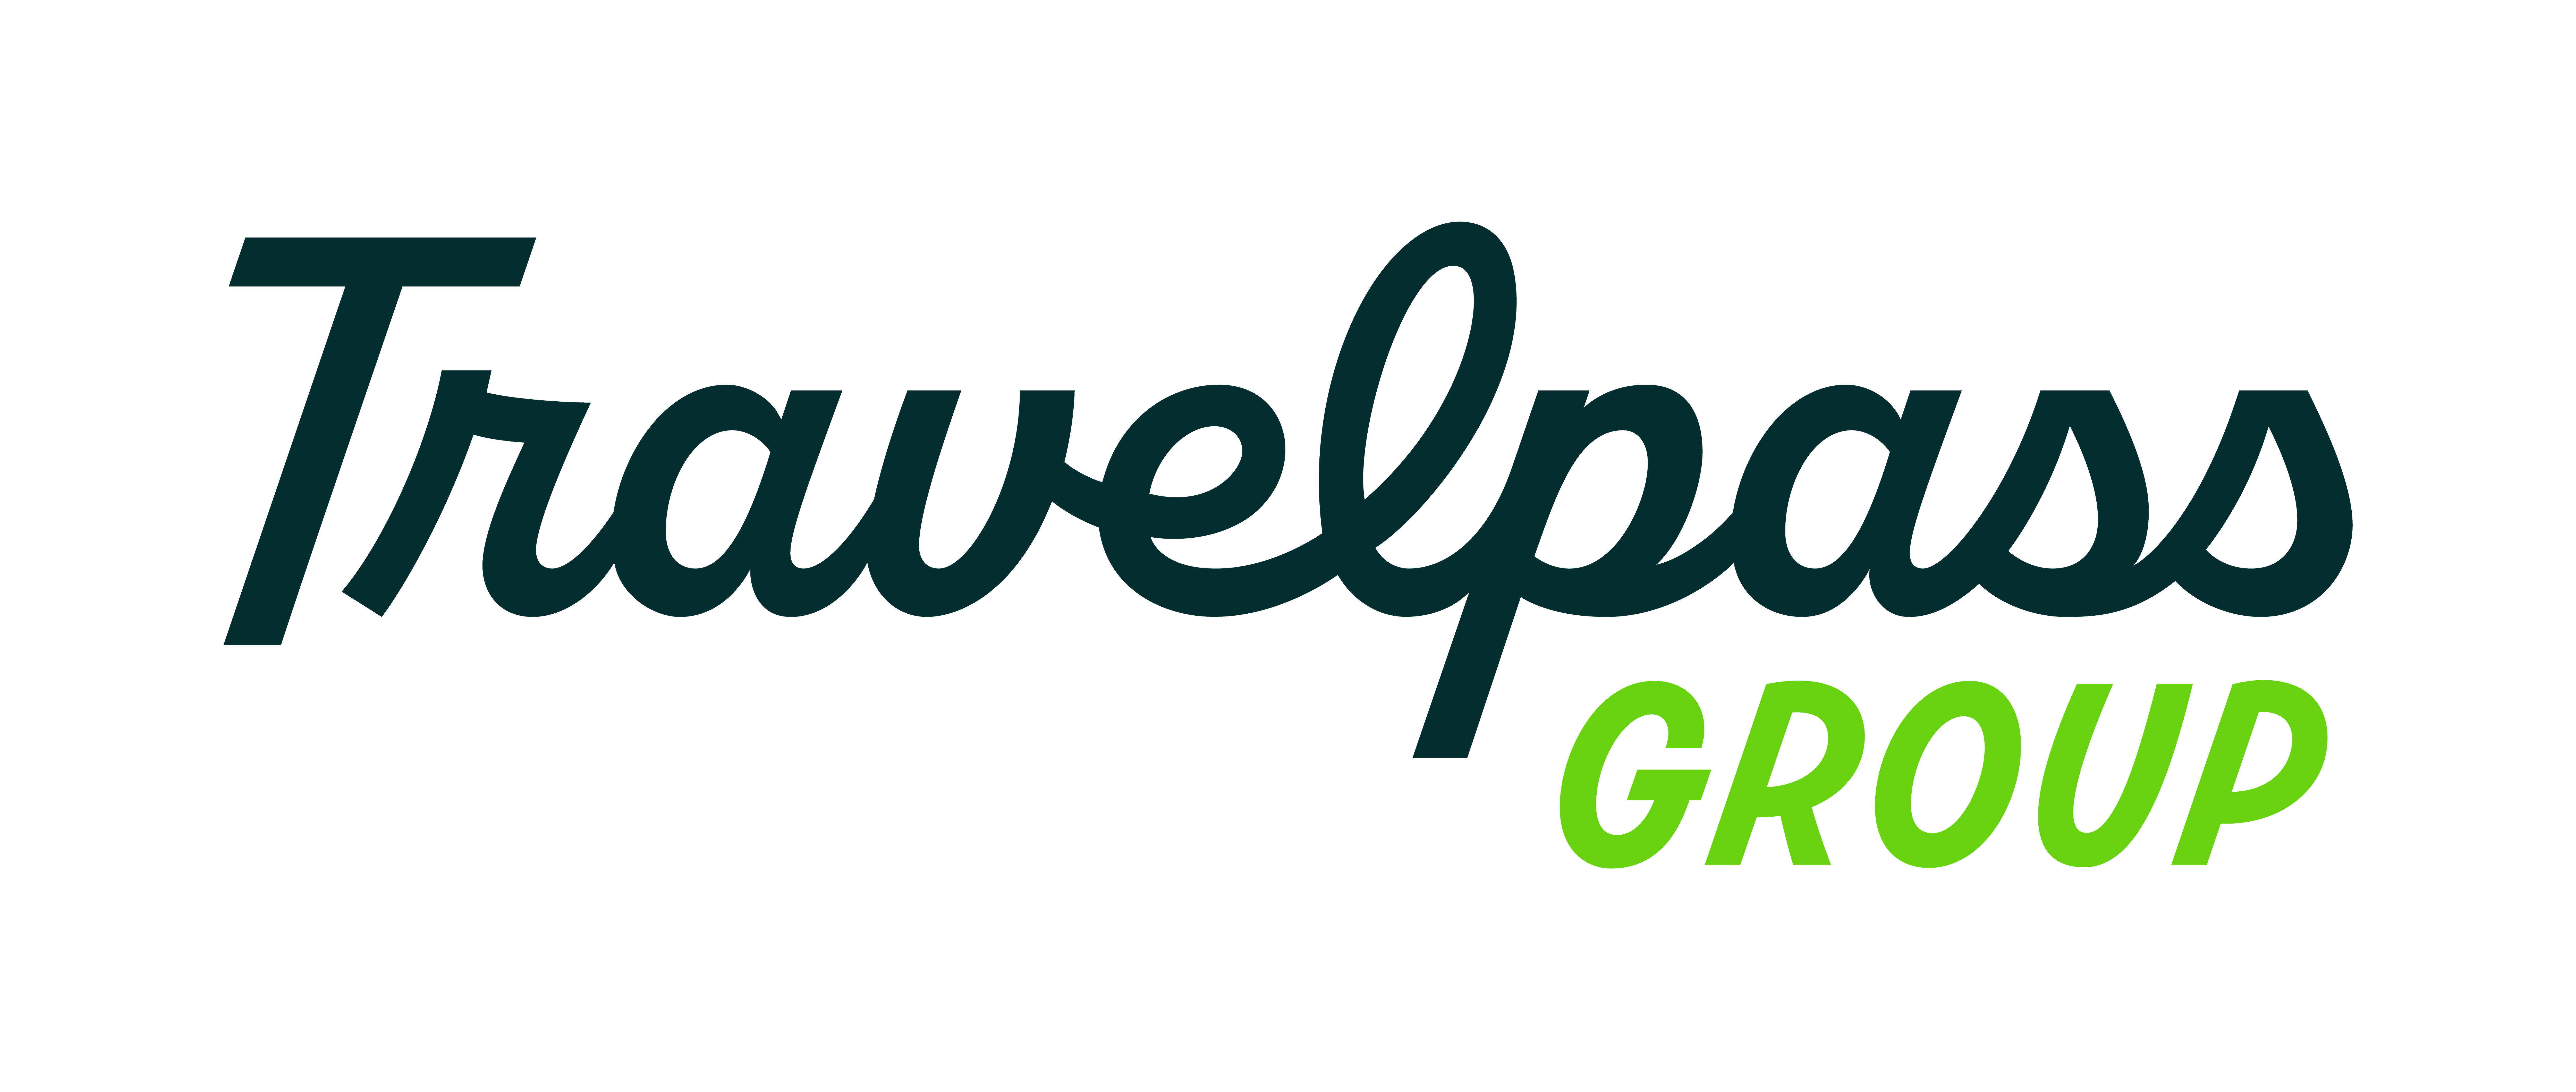 Travelpass Group logo